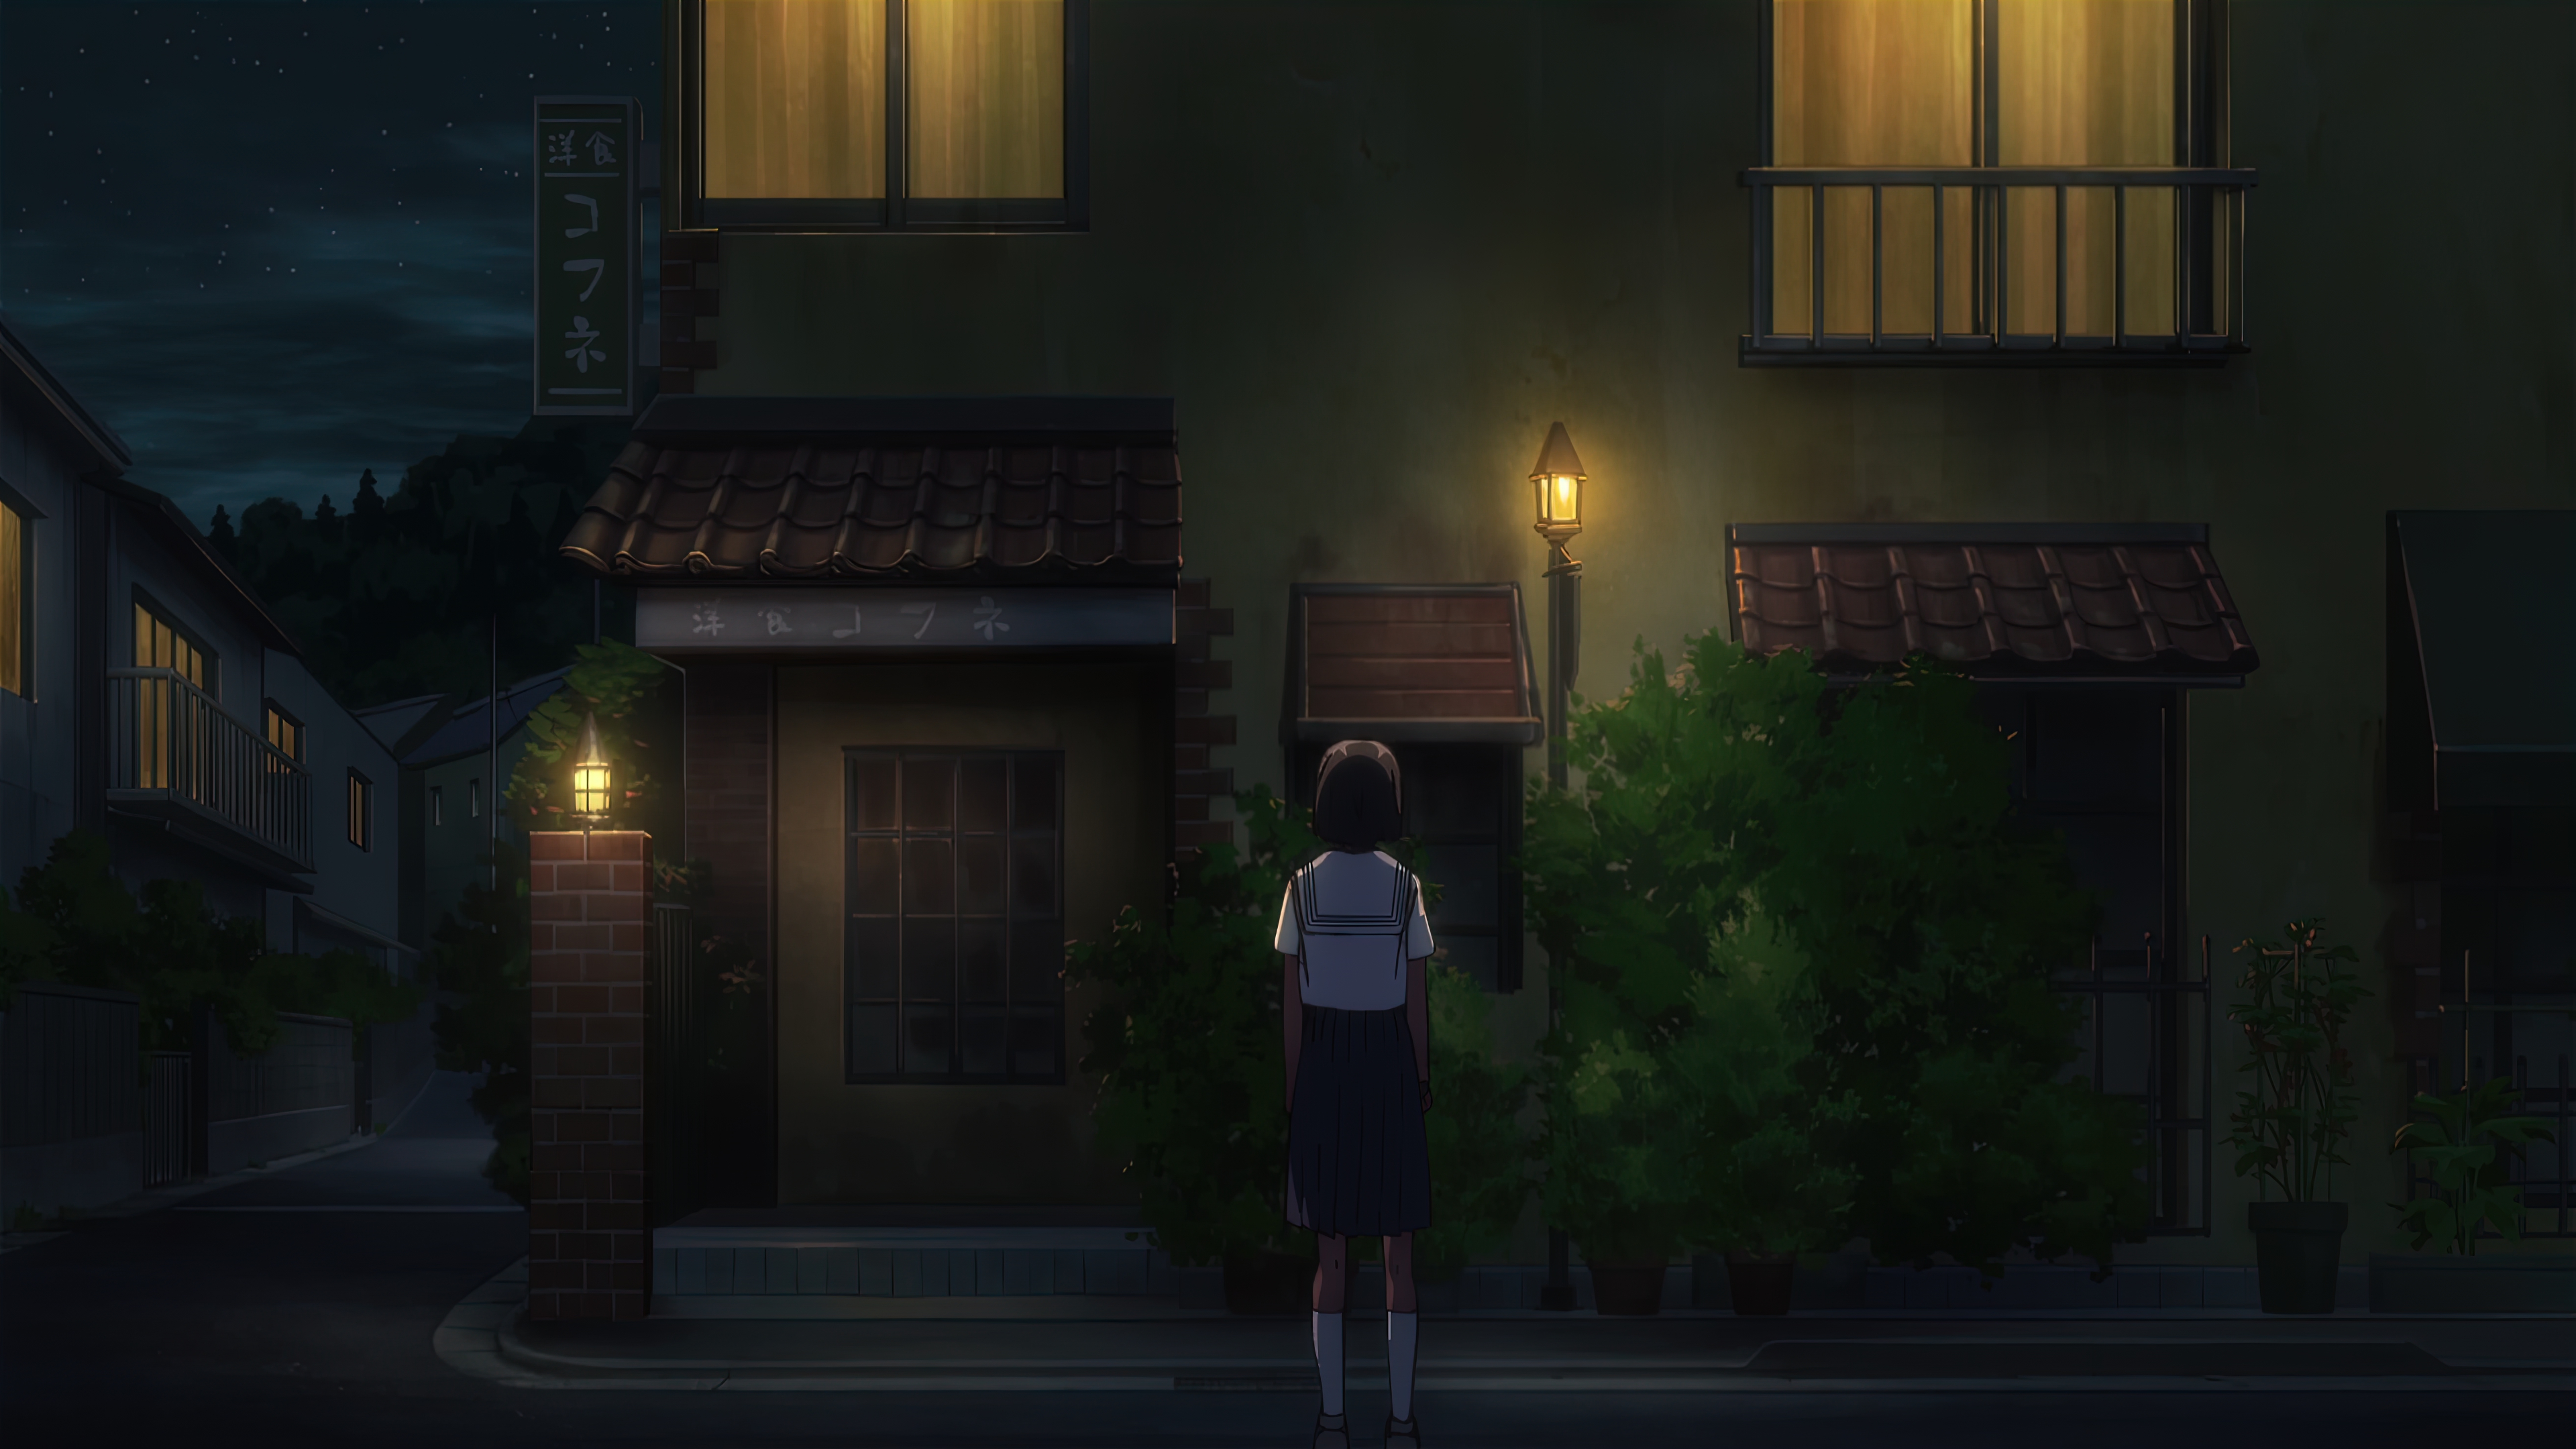 Anime Landscape: Park At Night Background, 56% OFF